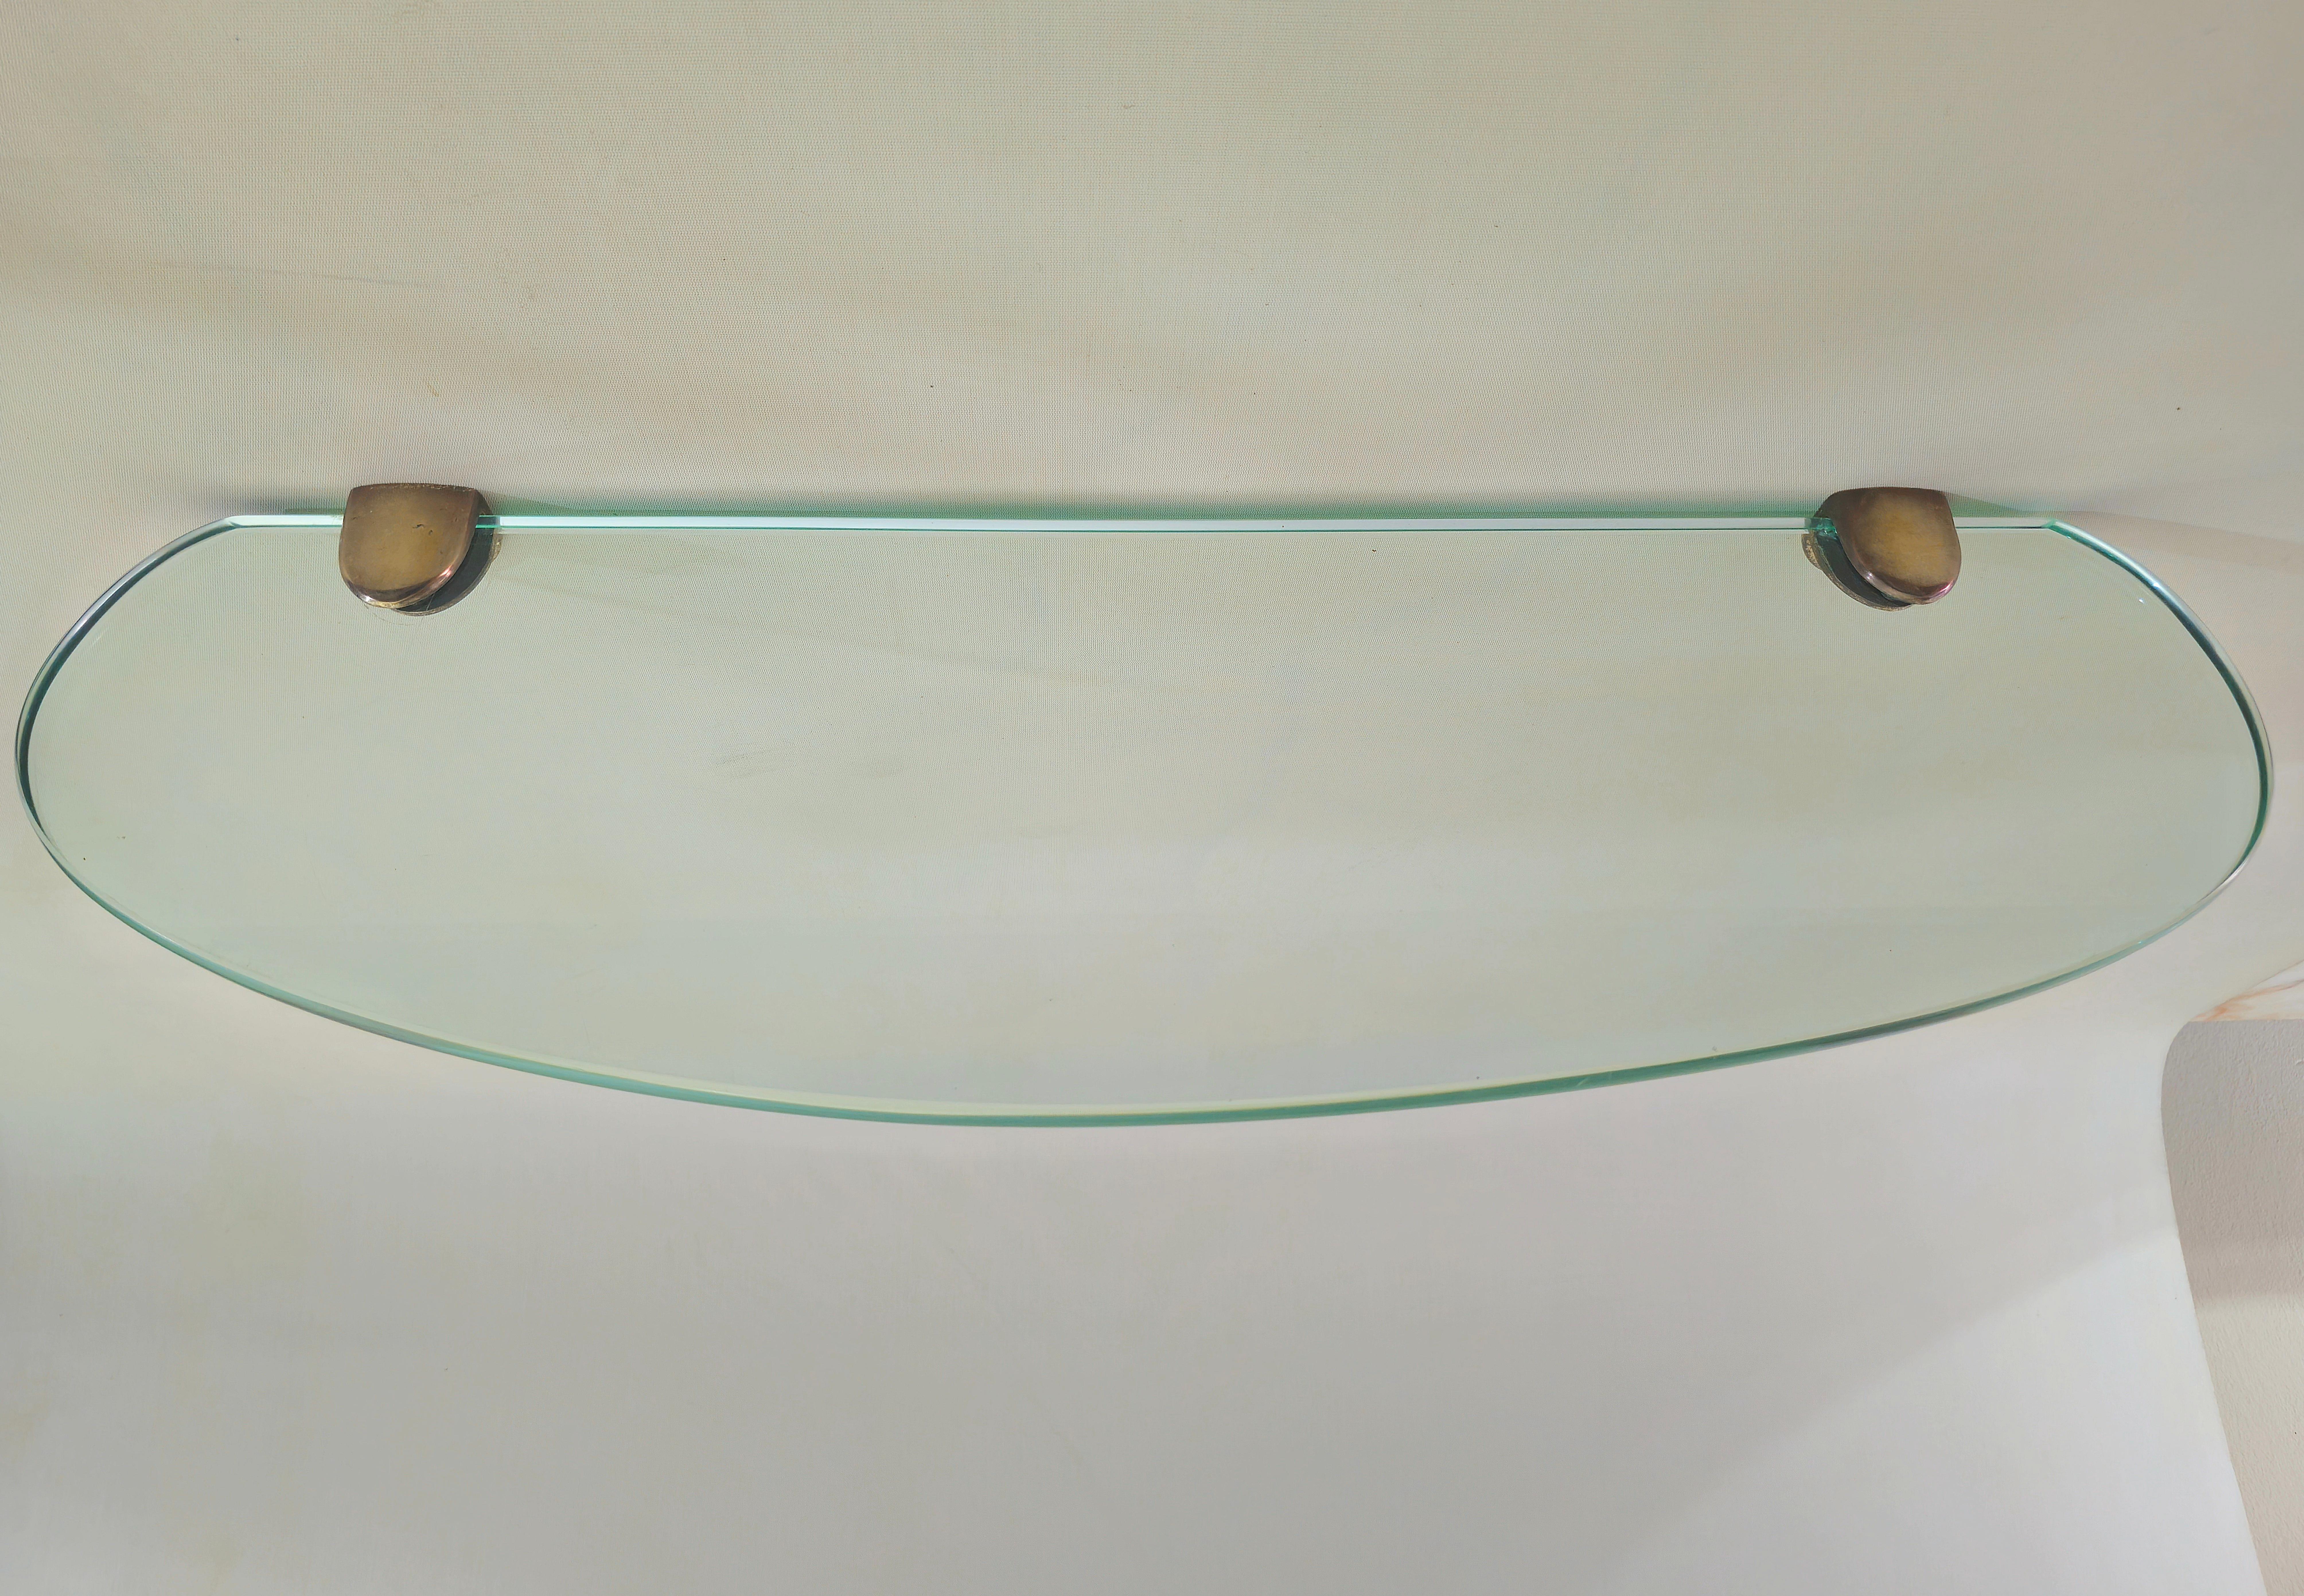 20th Century Unique Wall Console Glass  by Fontana Arte Design Italia 1950s. Midcentury For Sale